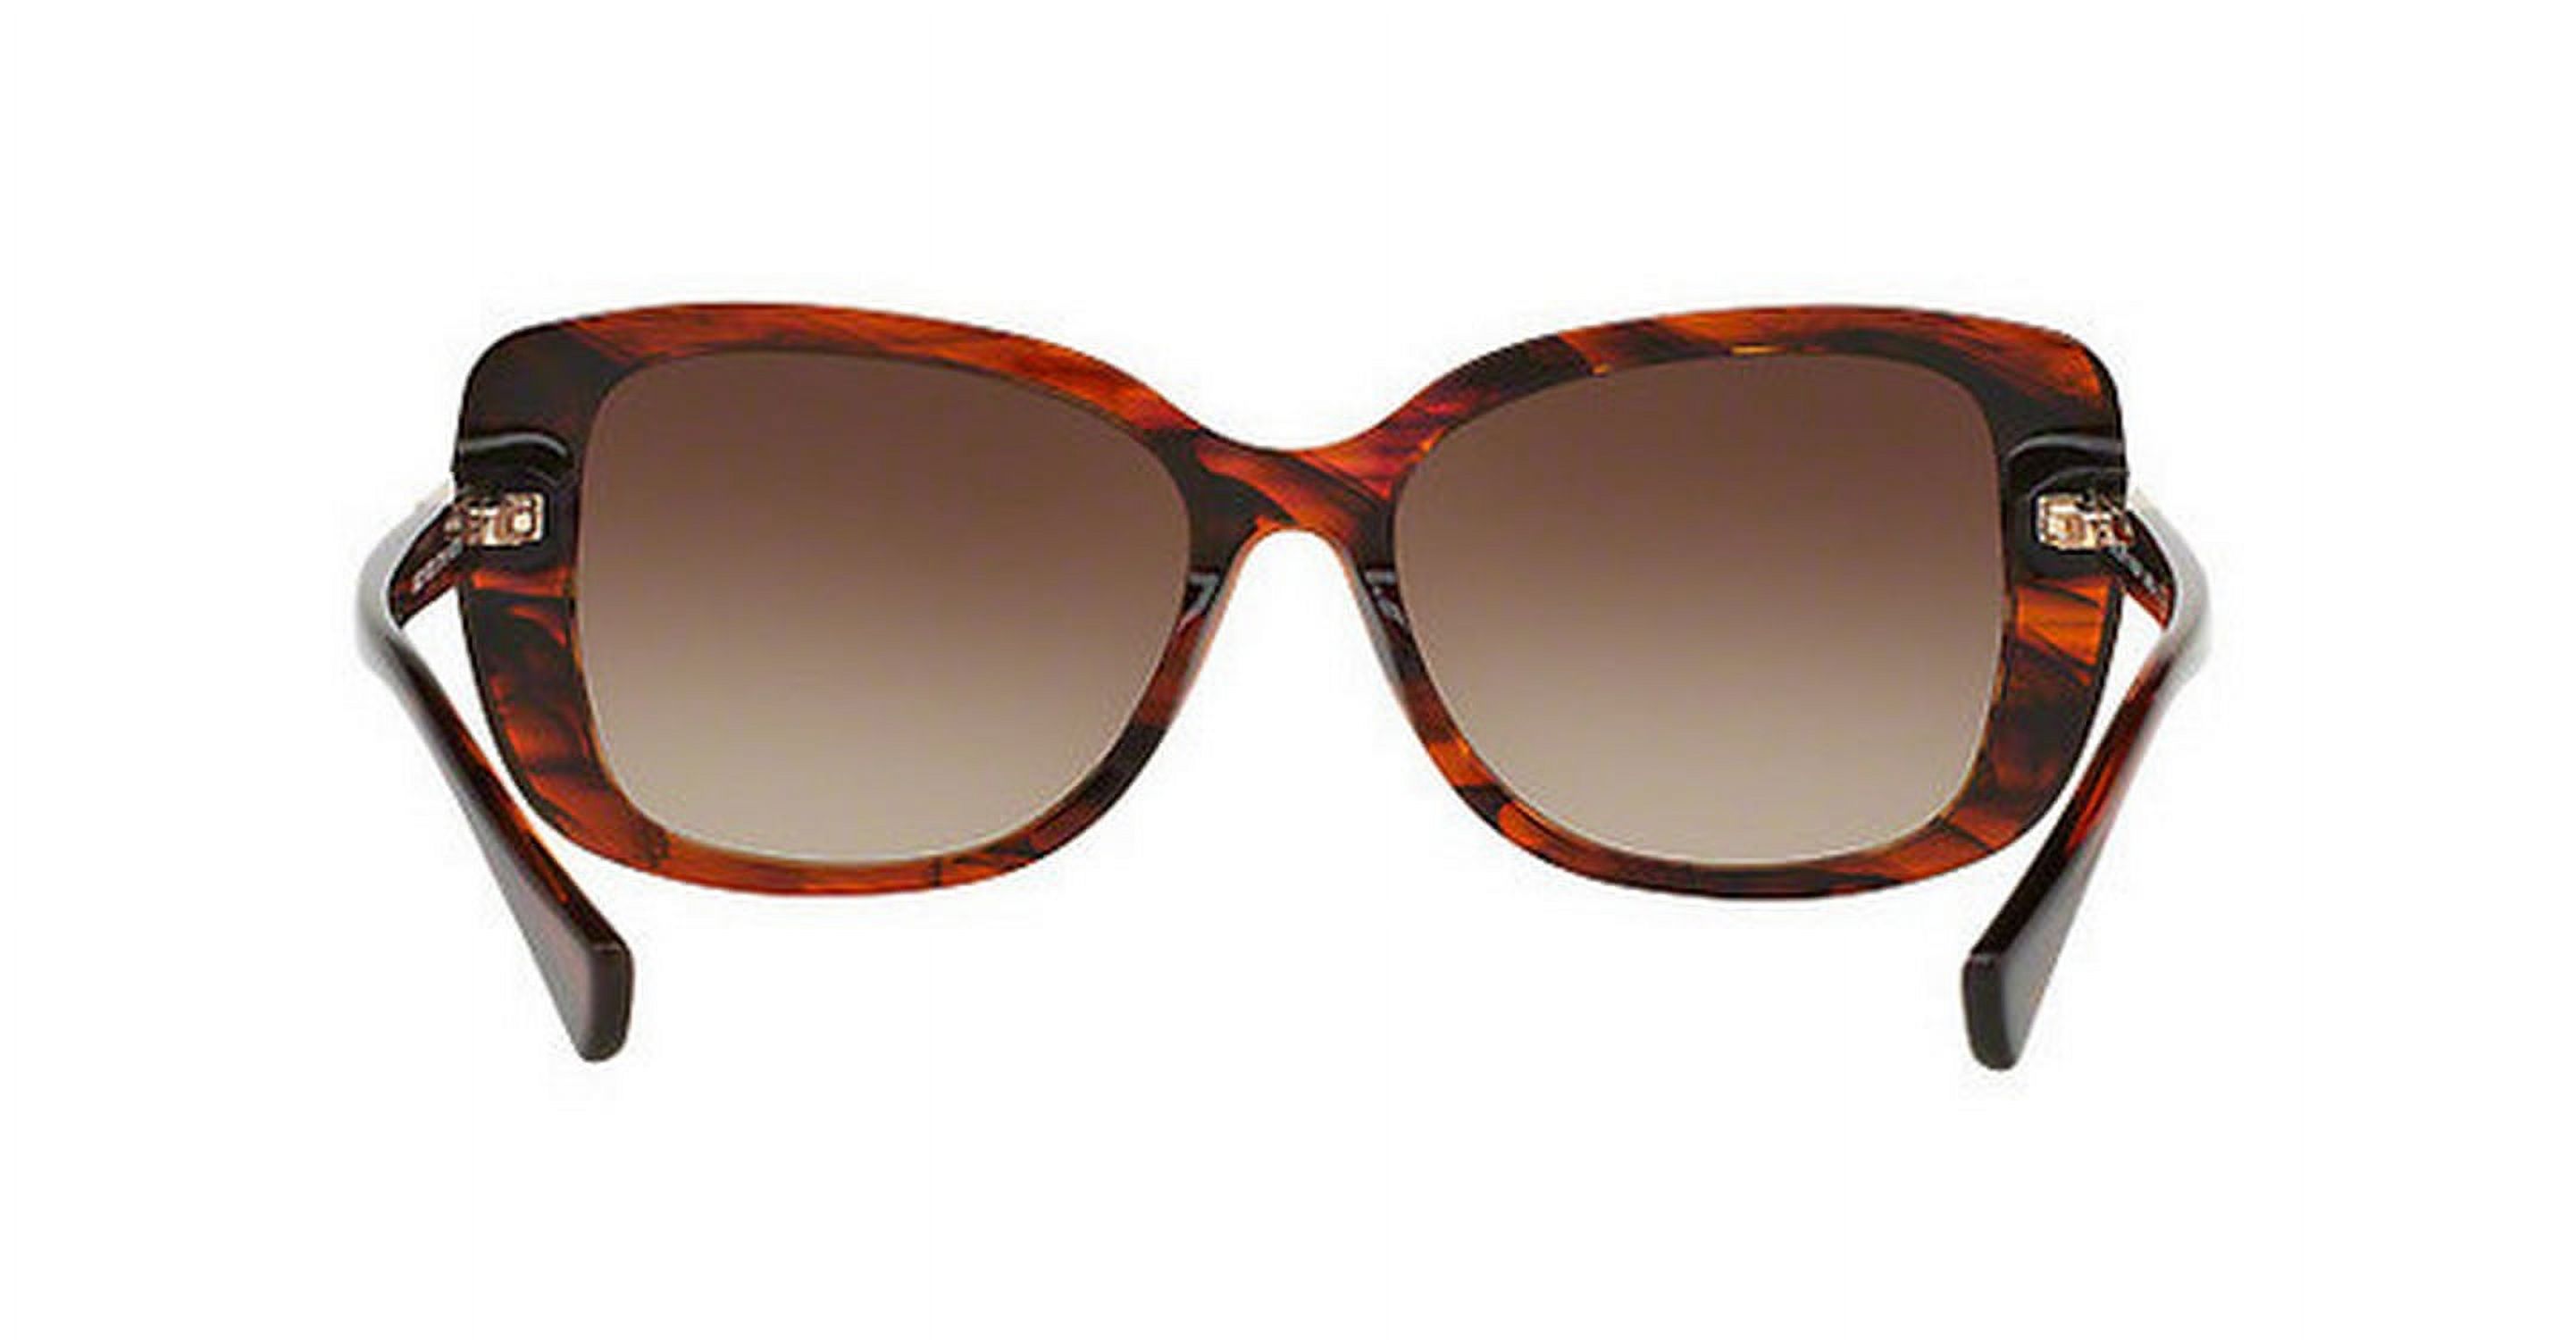 Sunglasses Ralph RA 5223 162513 Shiny Striped Brown - image 2 of 3